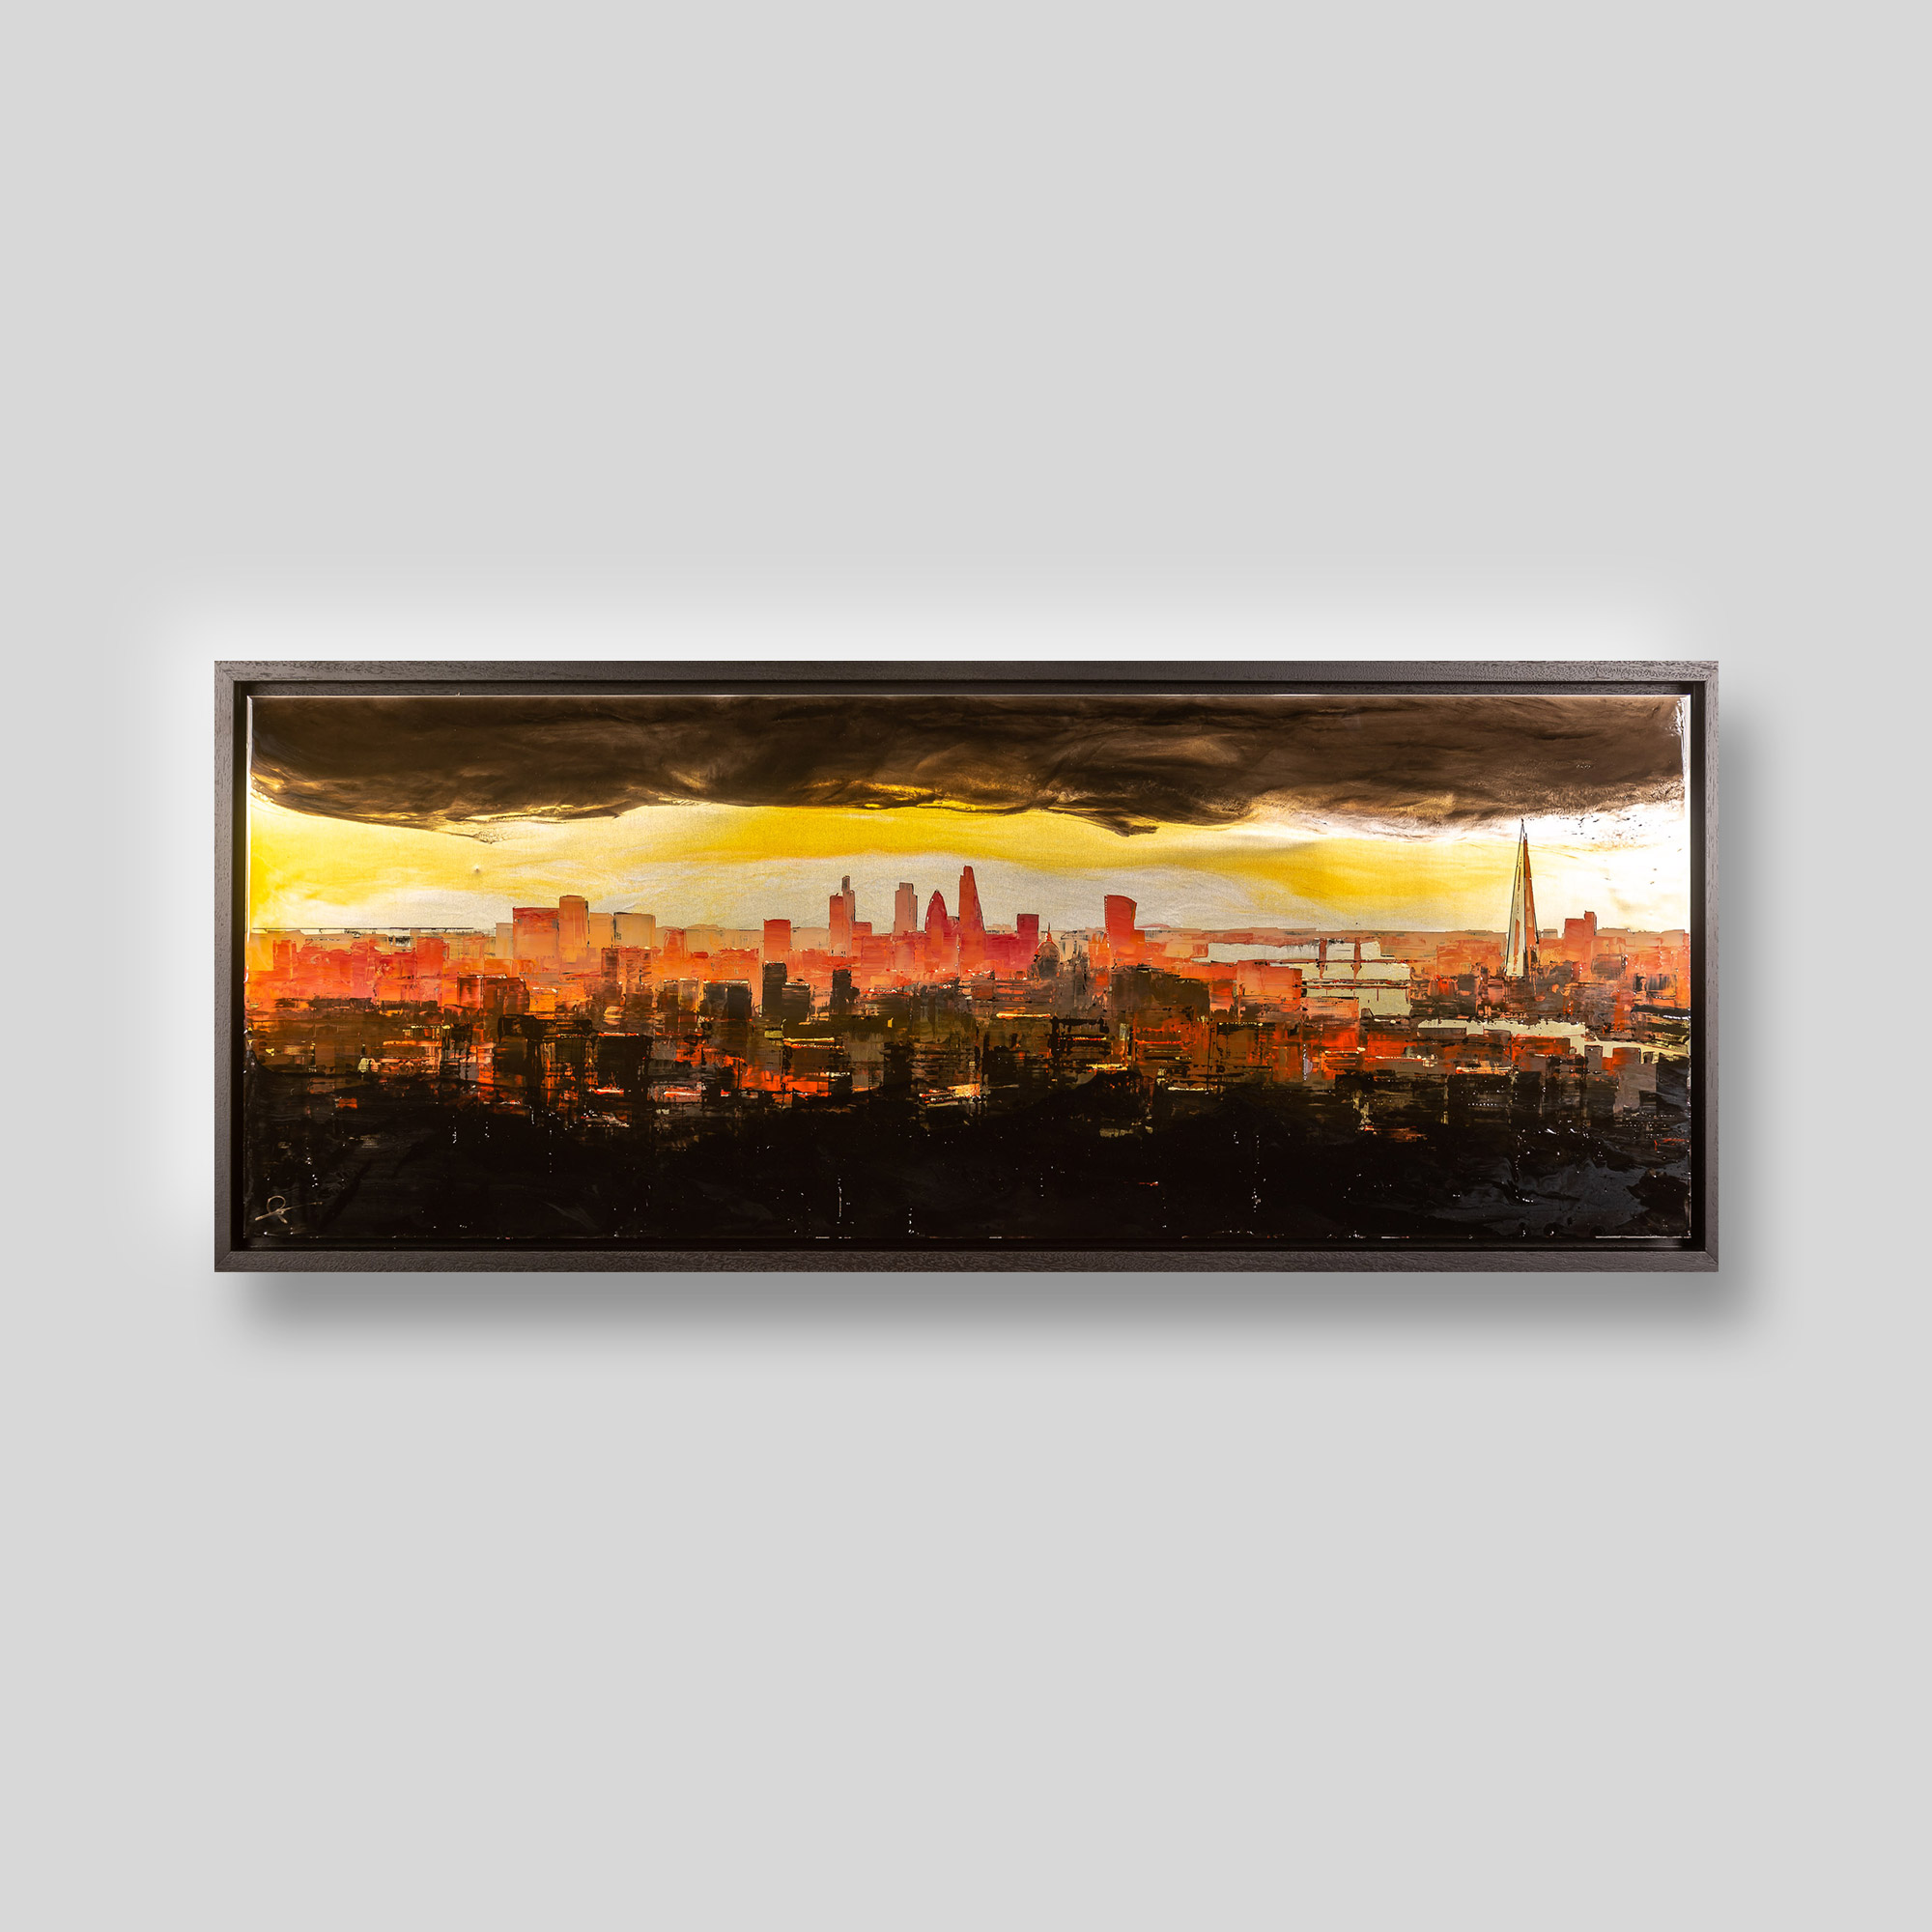 London Radiance by Paul Kenton, UK Contemporary artist, a London Cityscape Resined Mixed Media Original Painting on Aluminium of the London Skyline